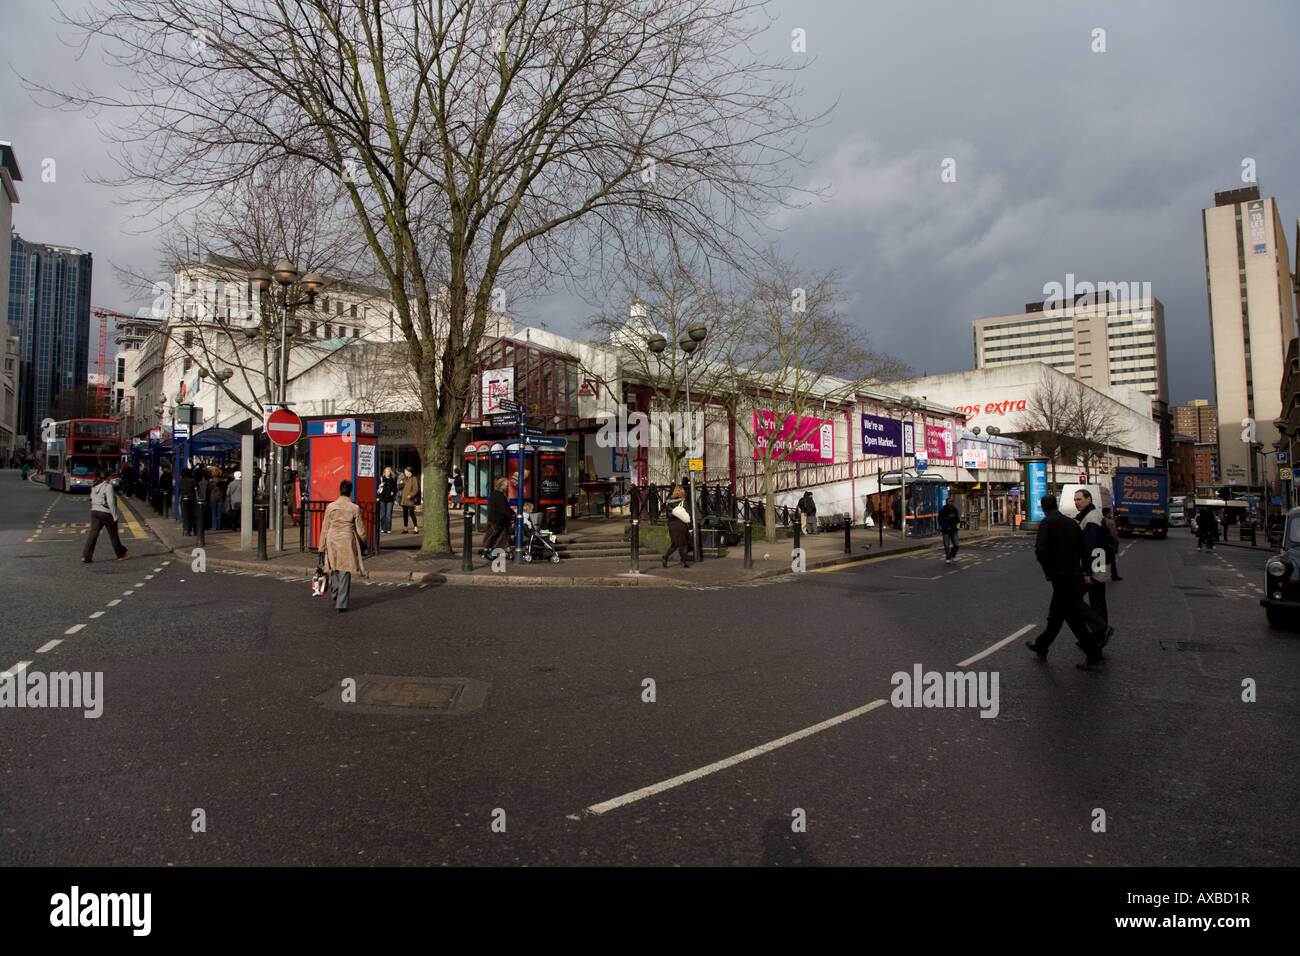 Dale end, Birmingham Stock Photo - Alamy